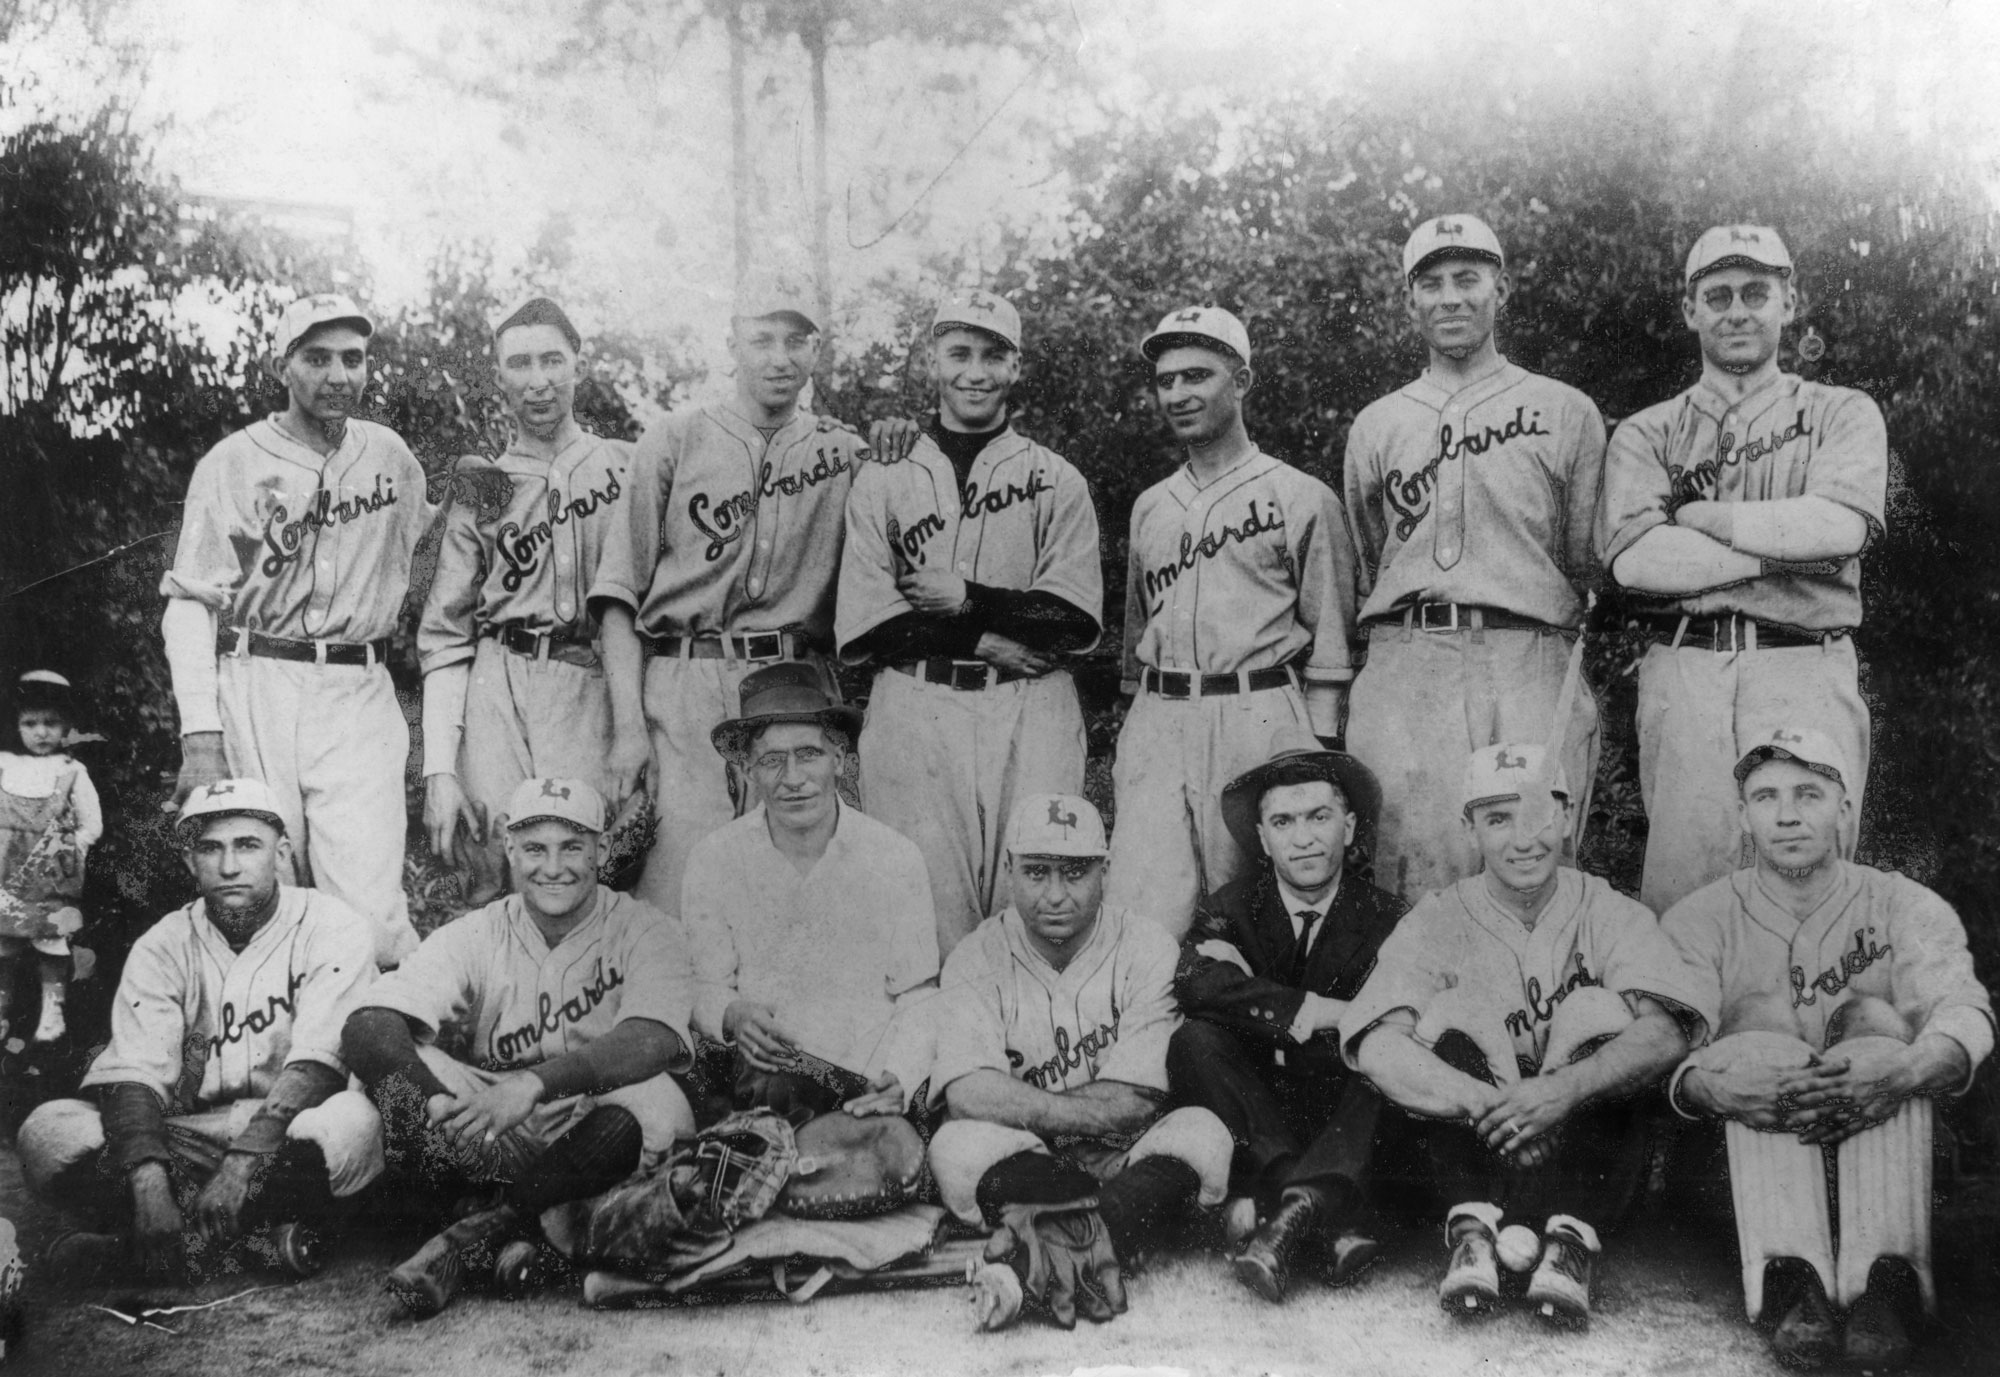 Lombardi Billiard Hall baseball team, Denver, about 1925